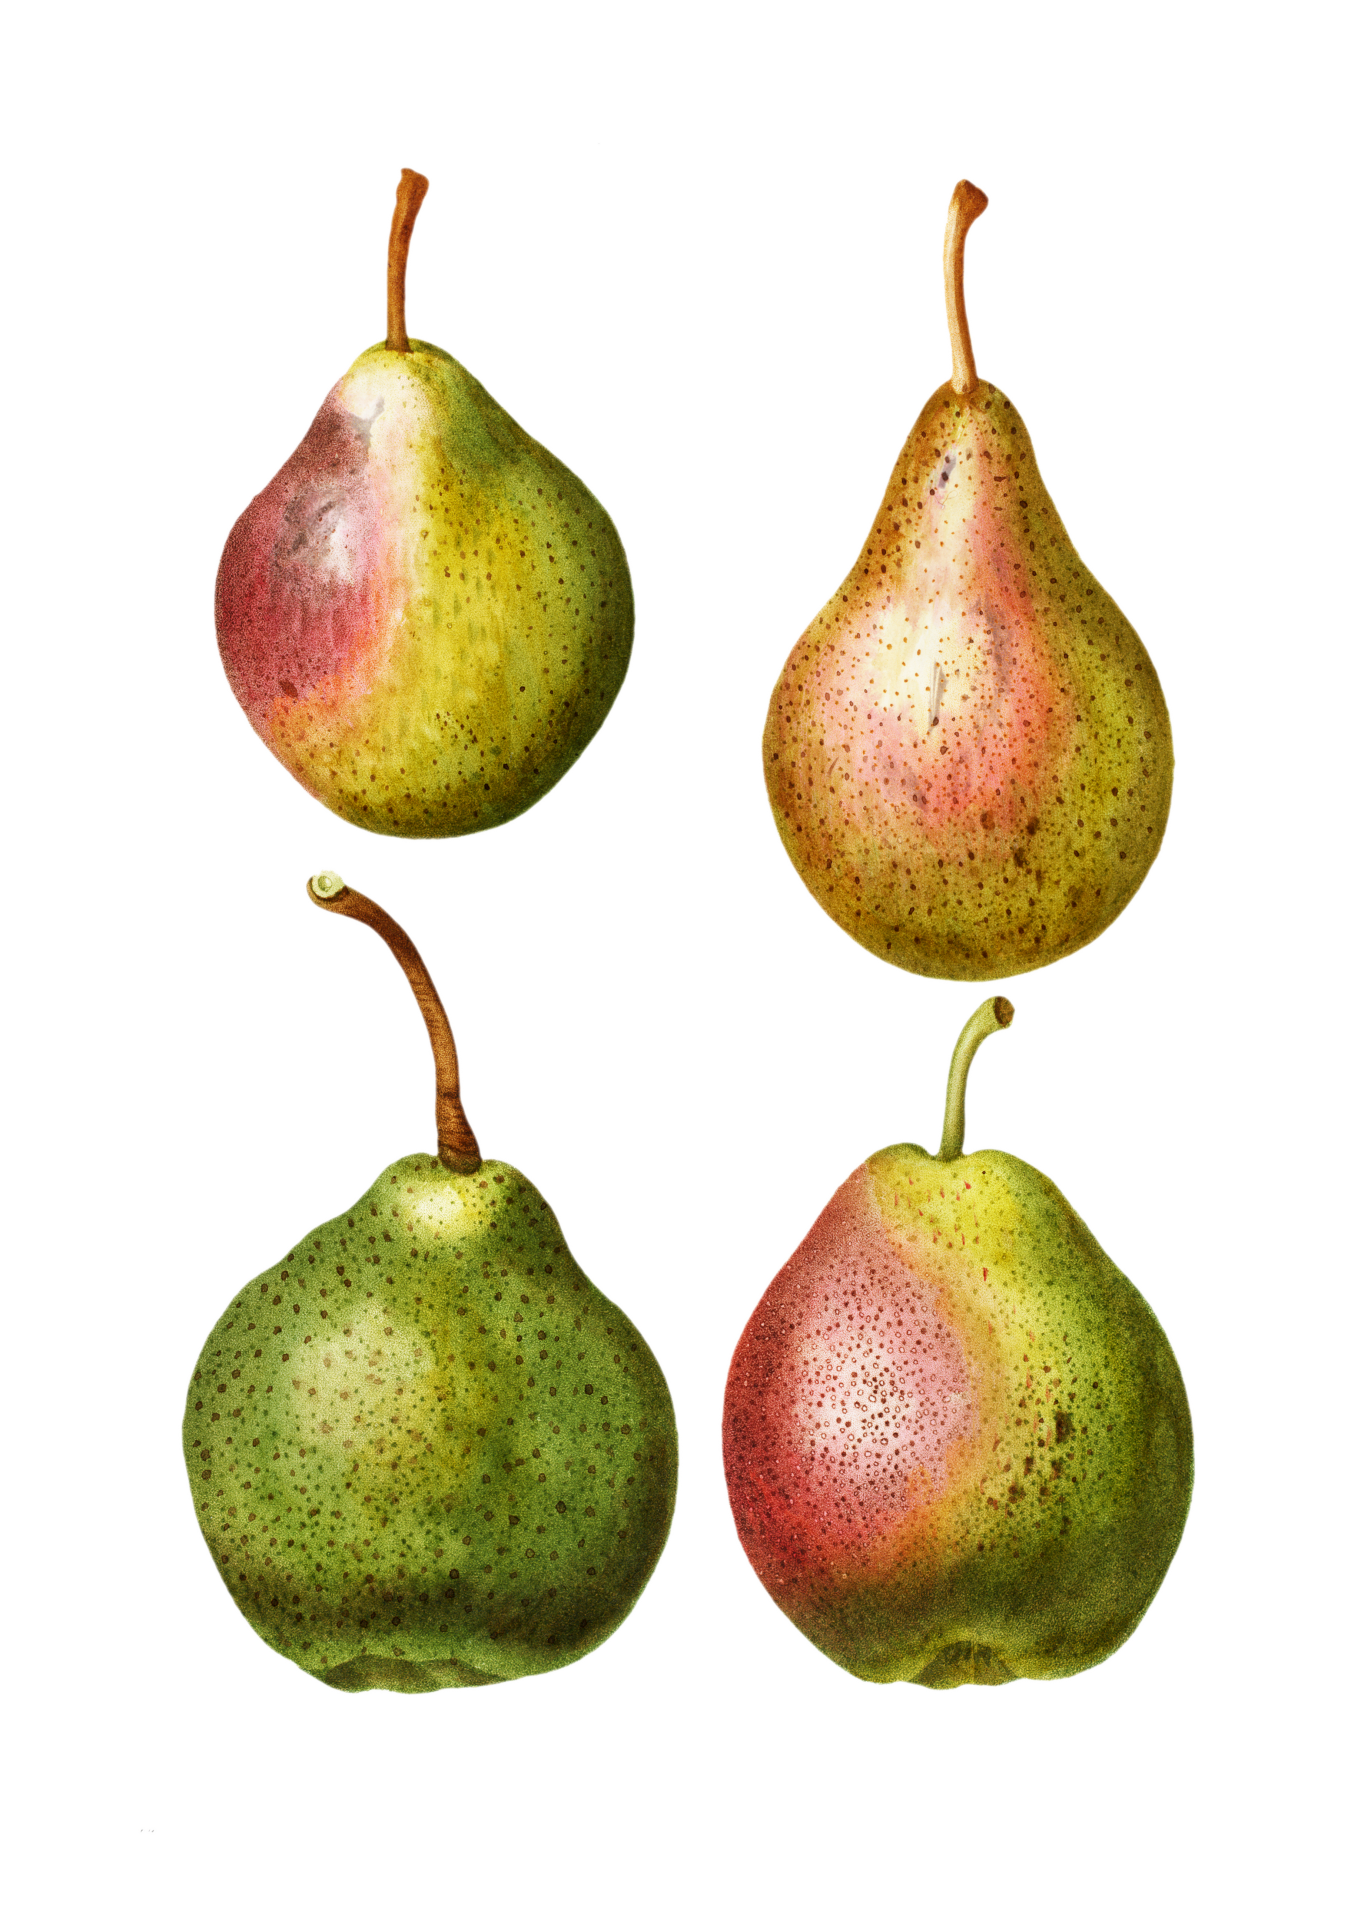 Fruta de pera fruta vintage